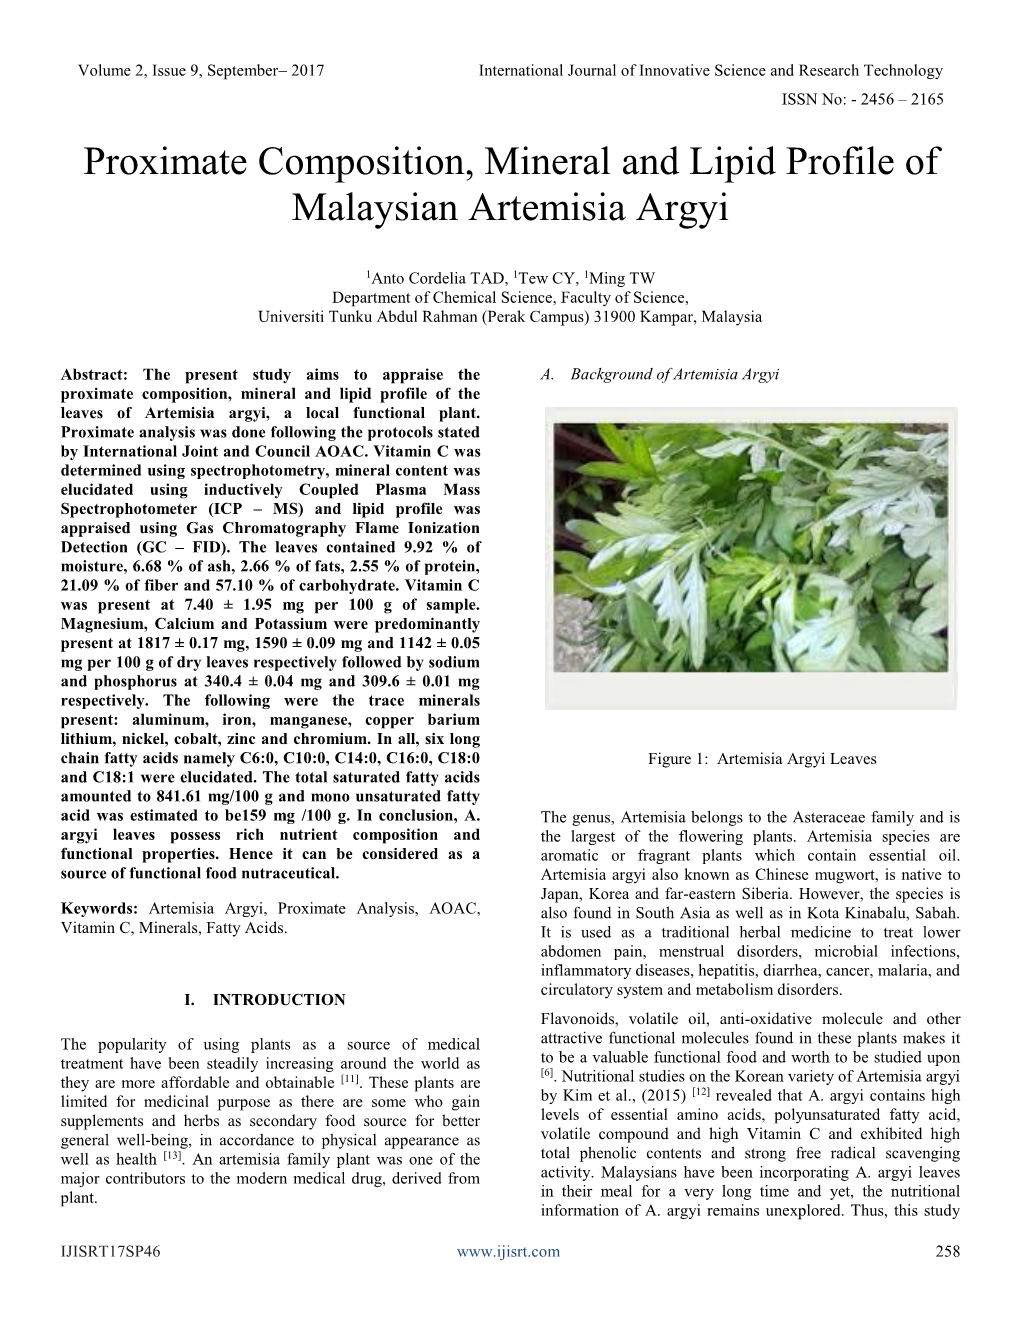 Proximate Composition, Mineral and Lipid Profile of Malaysian Artemisia